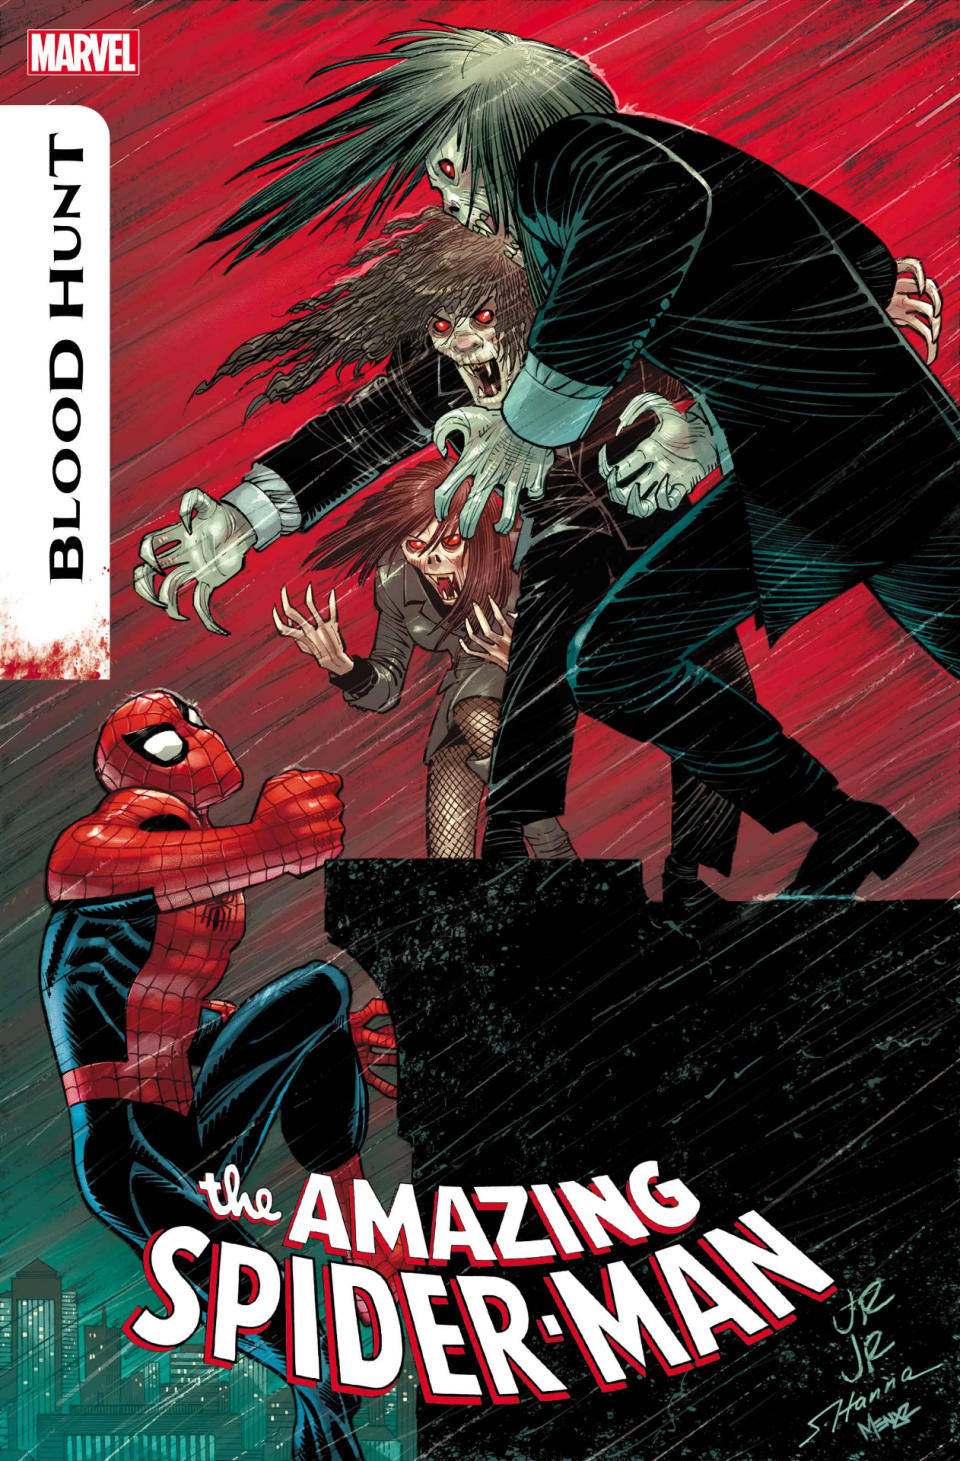 Amazing Spider-Man #49 cover by John Romita, Jr.